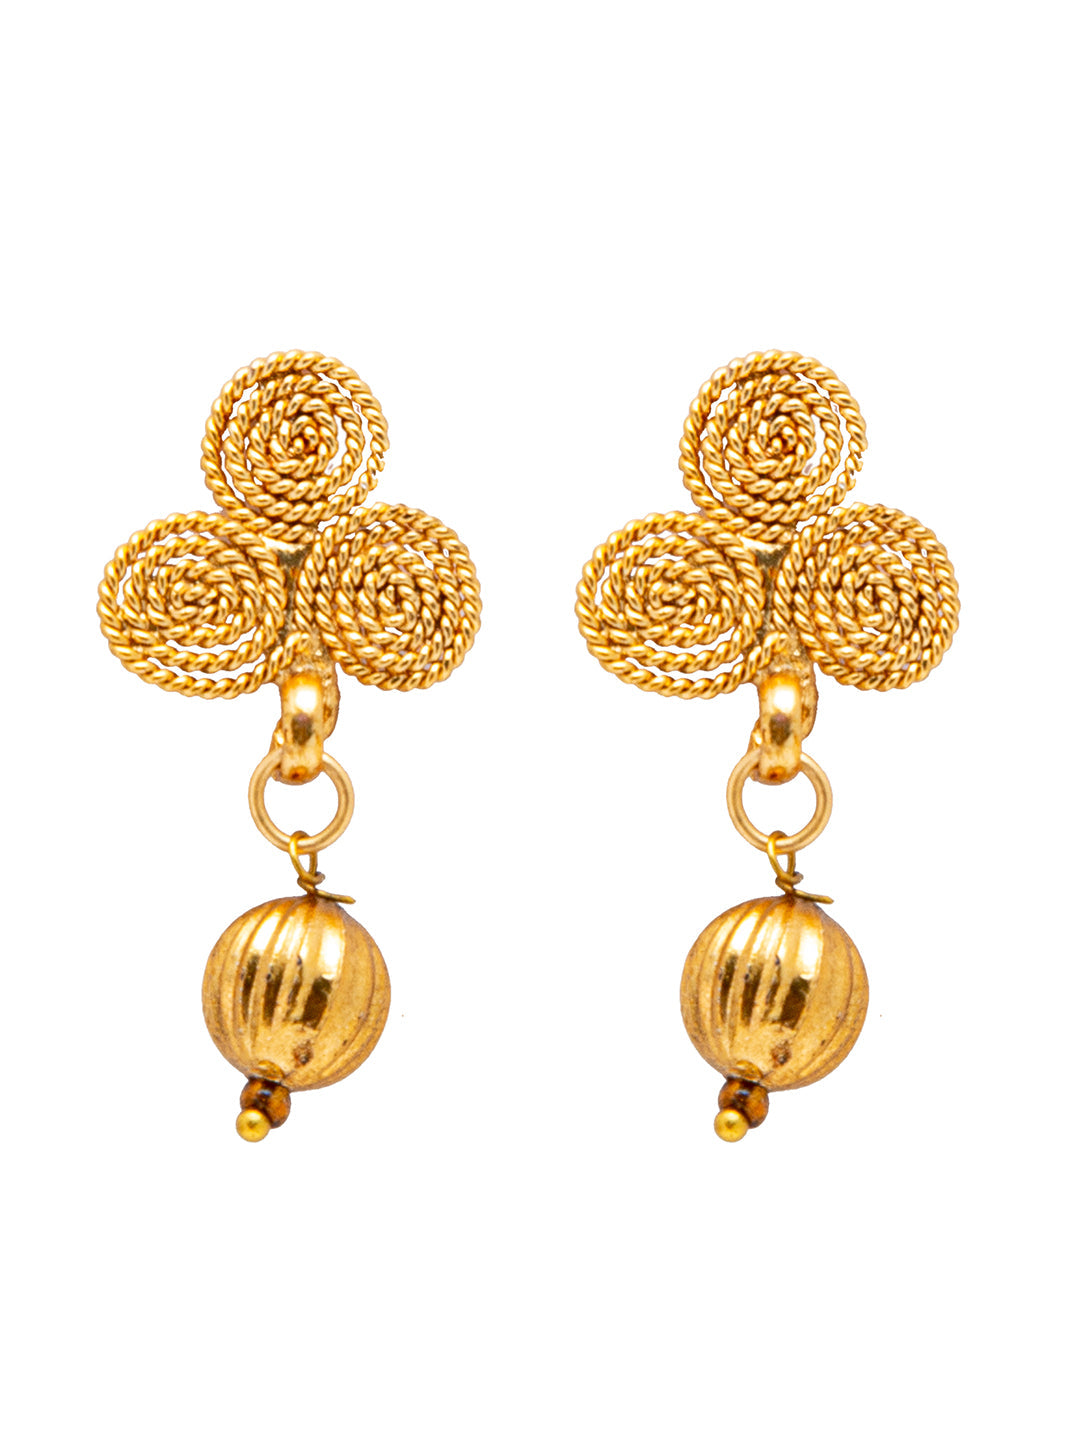 Filigree Craftsmanship Gold Earrings